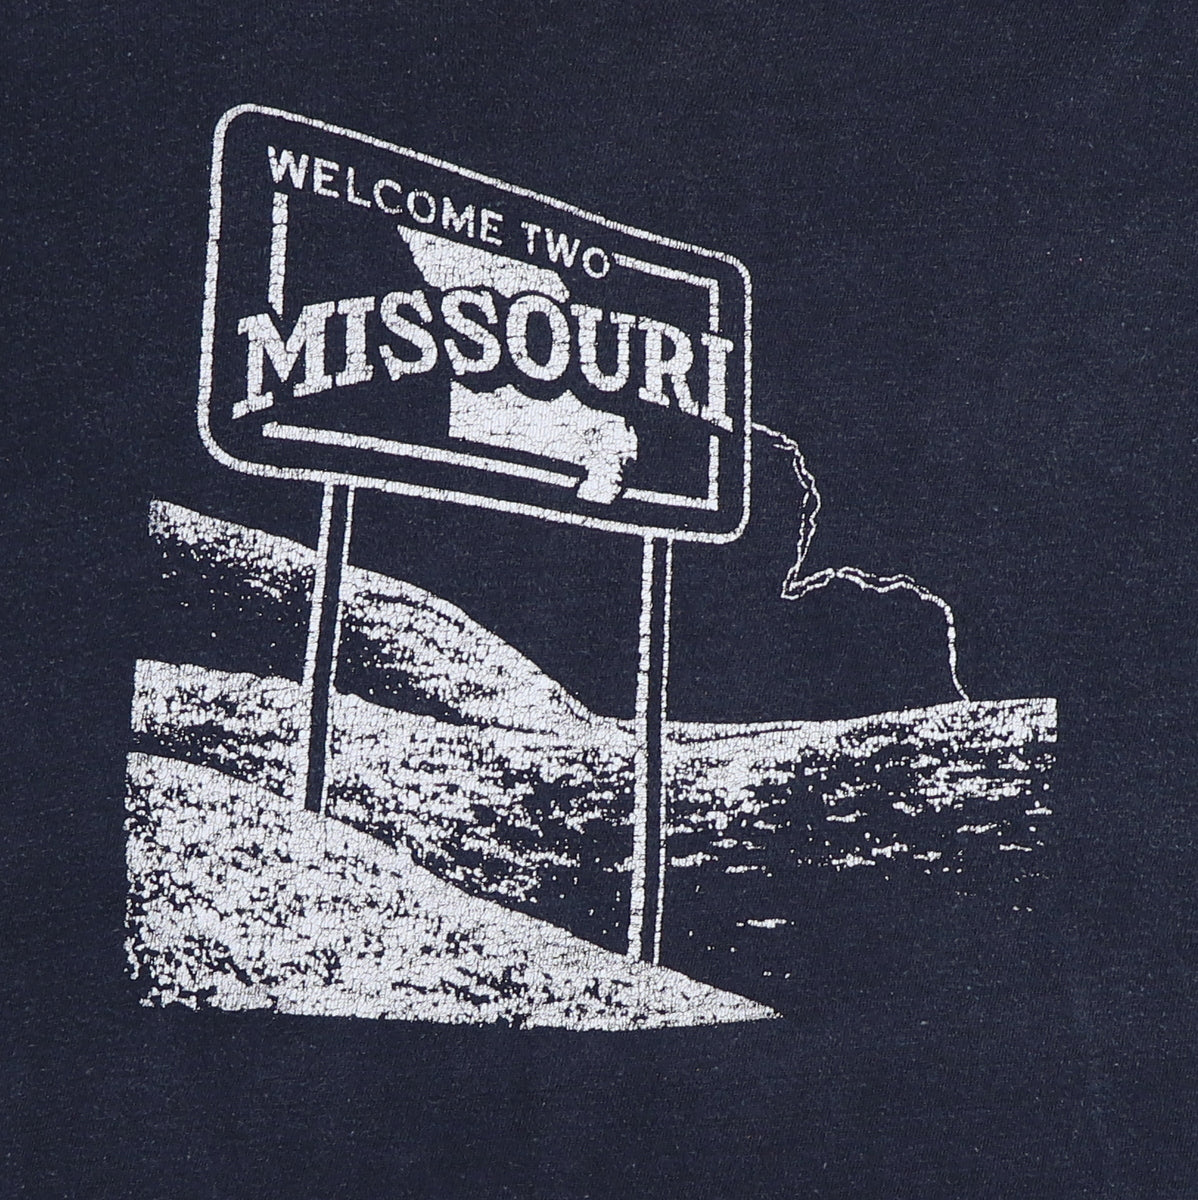 1979 Missouri Welcome Two Missouri Shirt